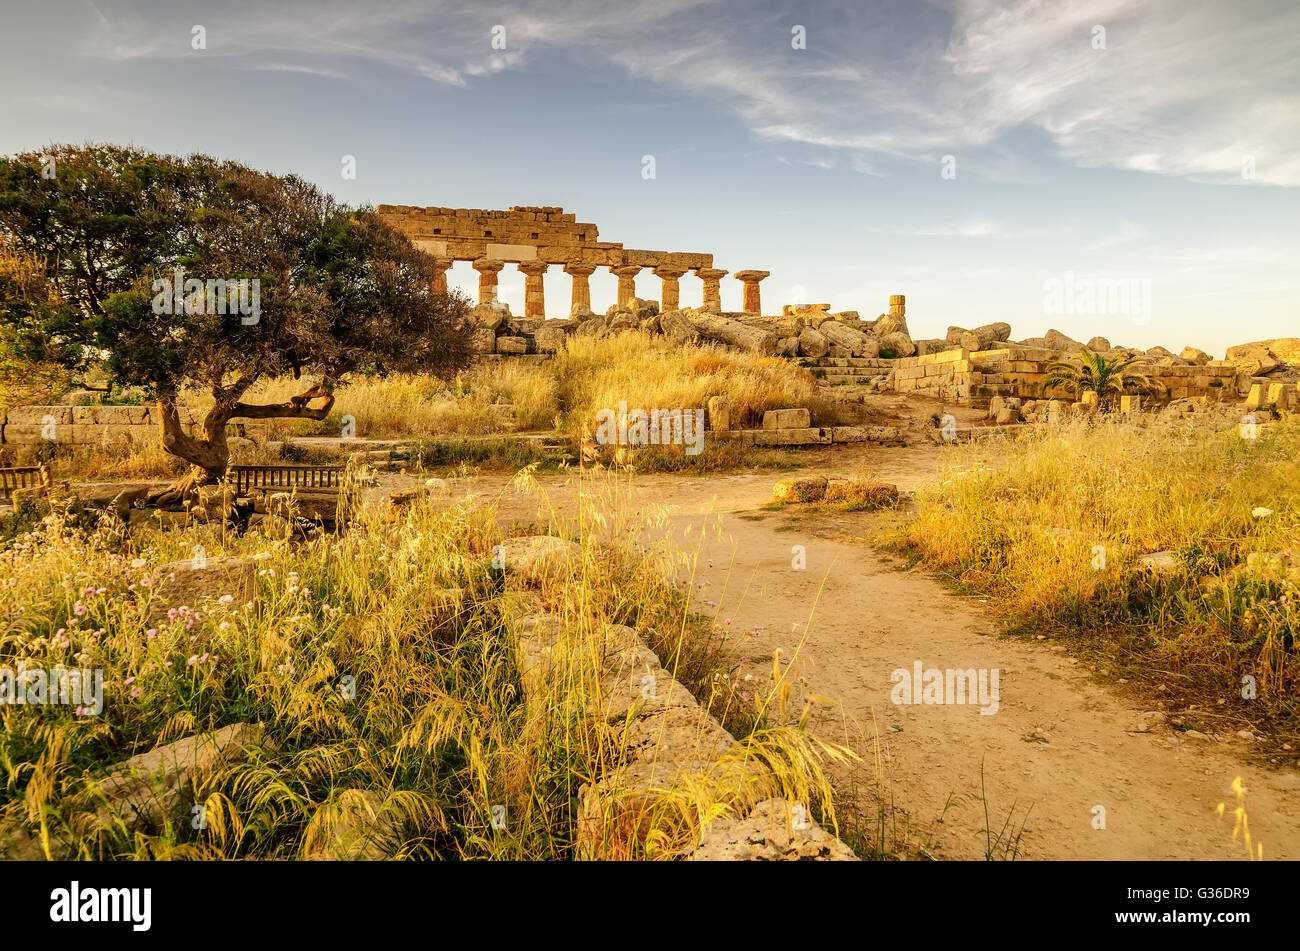 Sicily, Italy: Acropolis of Selinunte Stock Photo